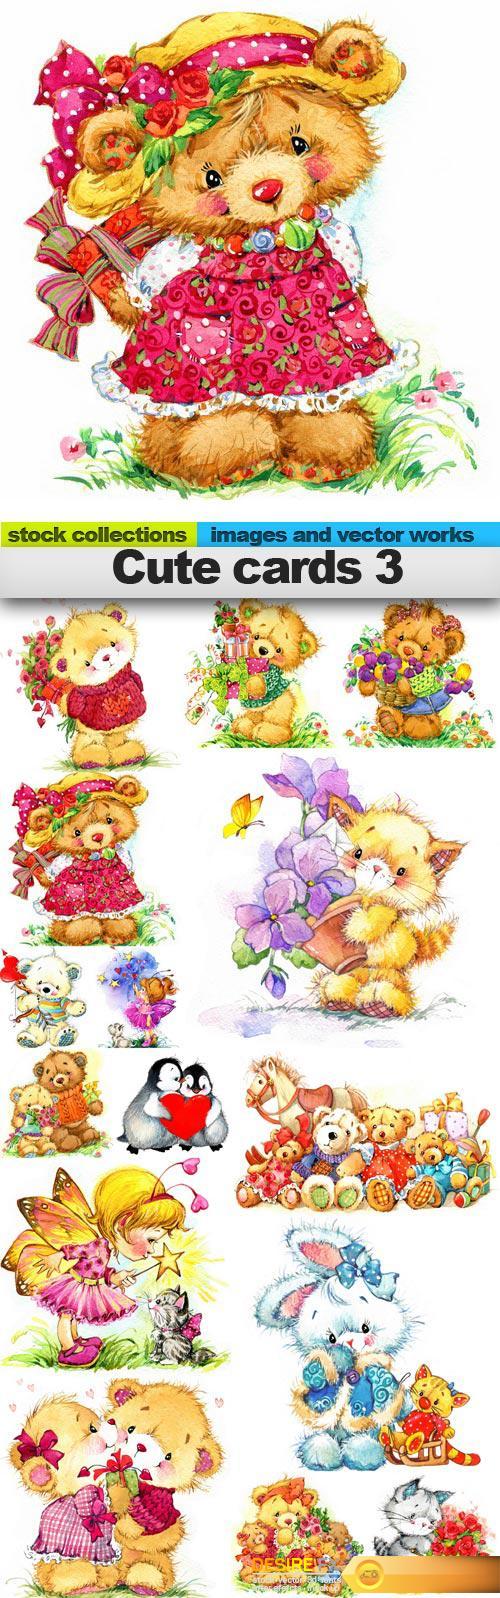 Cute cards 3, 15 x UHQ JPEG